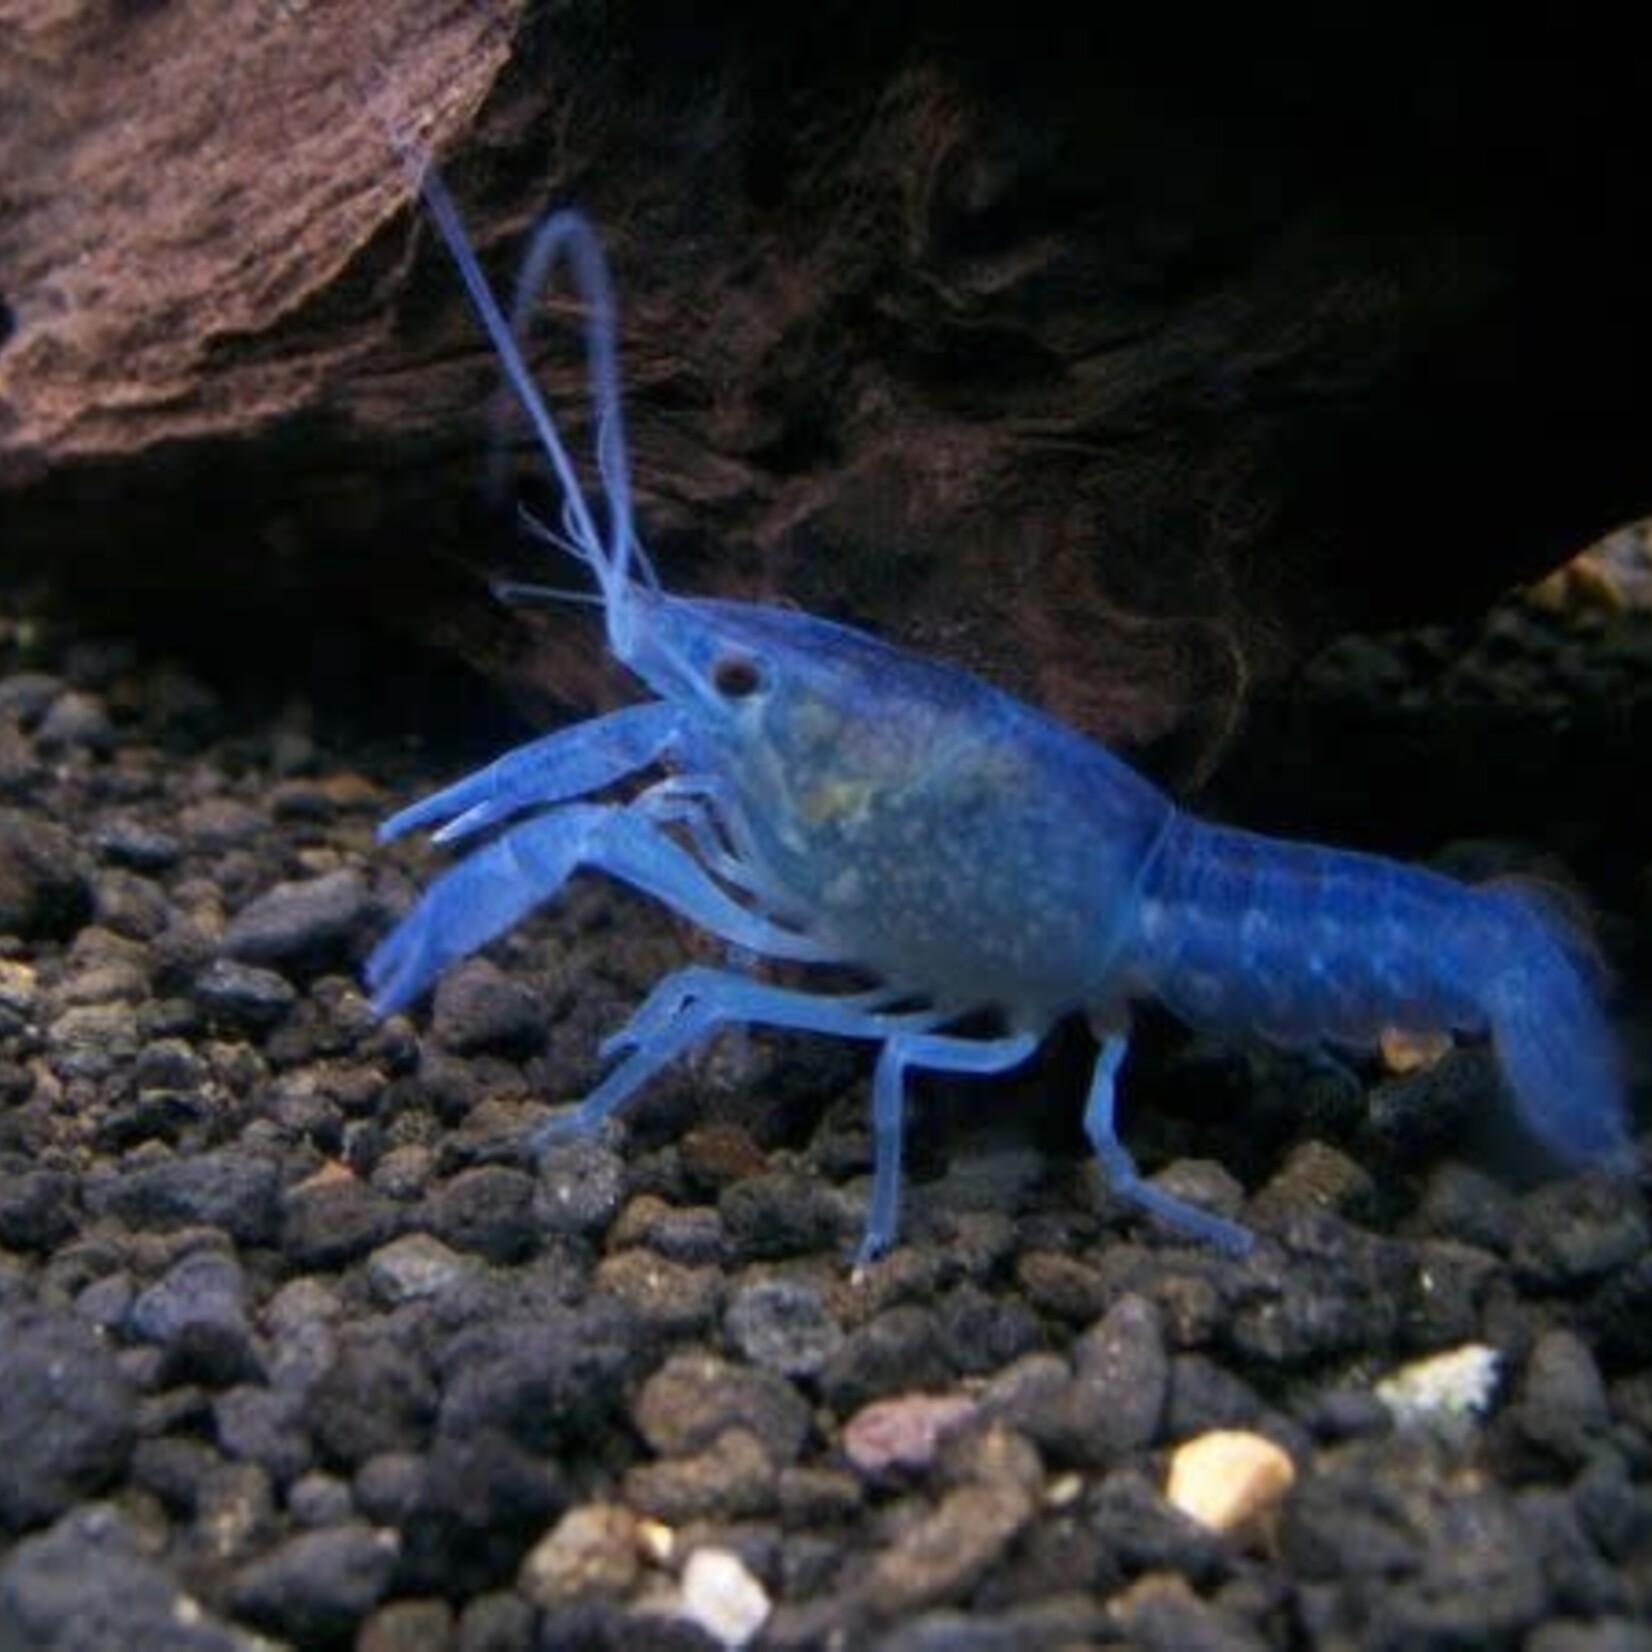 FISH - Lobster Blue Electric Crayfish (Procambarus alleni)